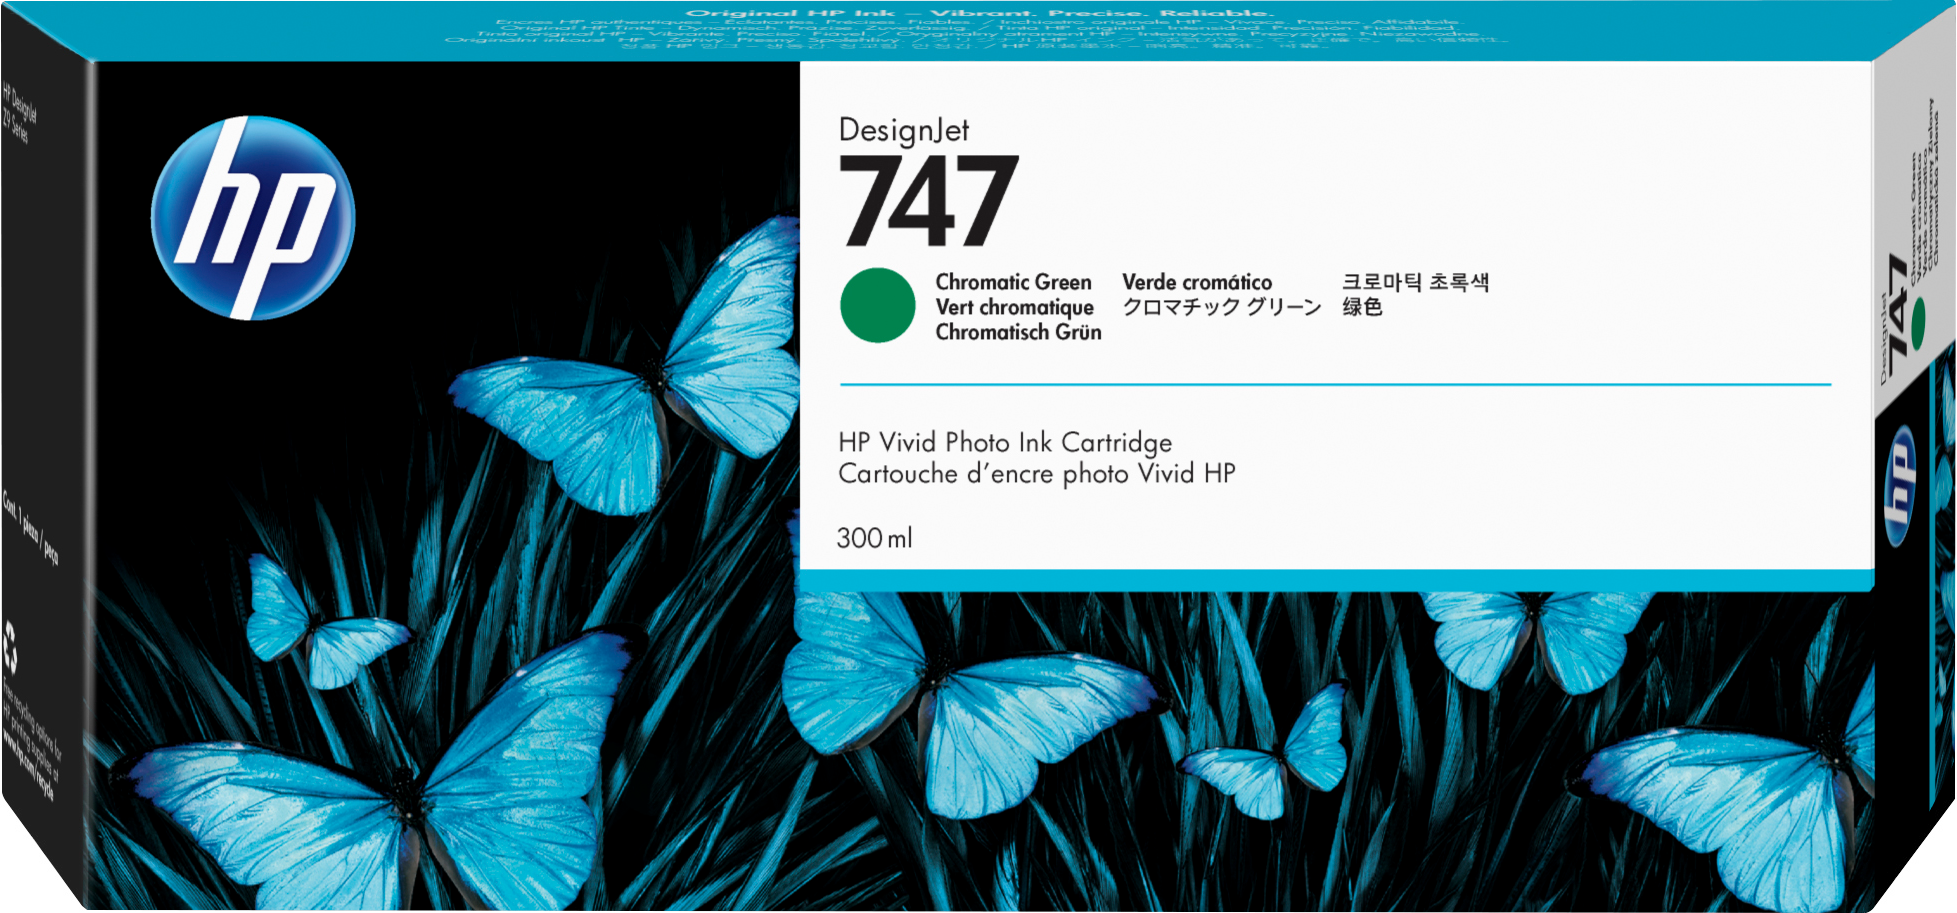 HP 747 chromatisch groene DesignJet inktcartridge, 300 ml single pack